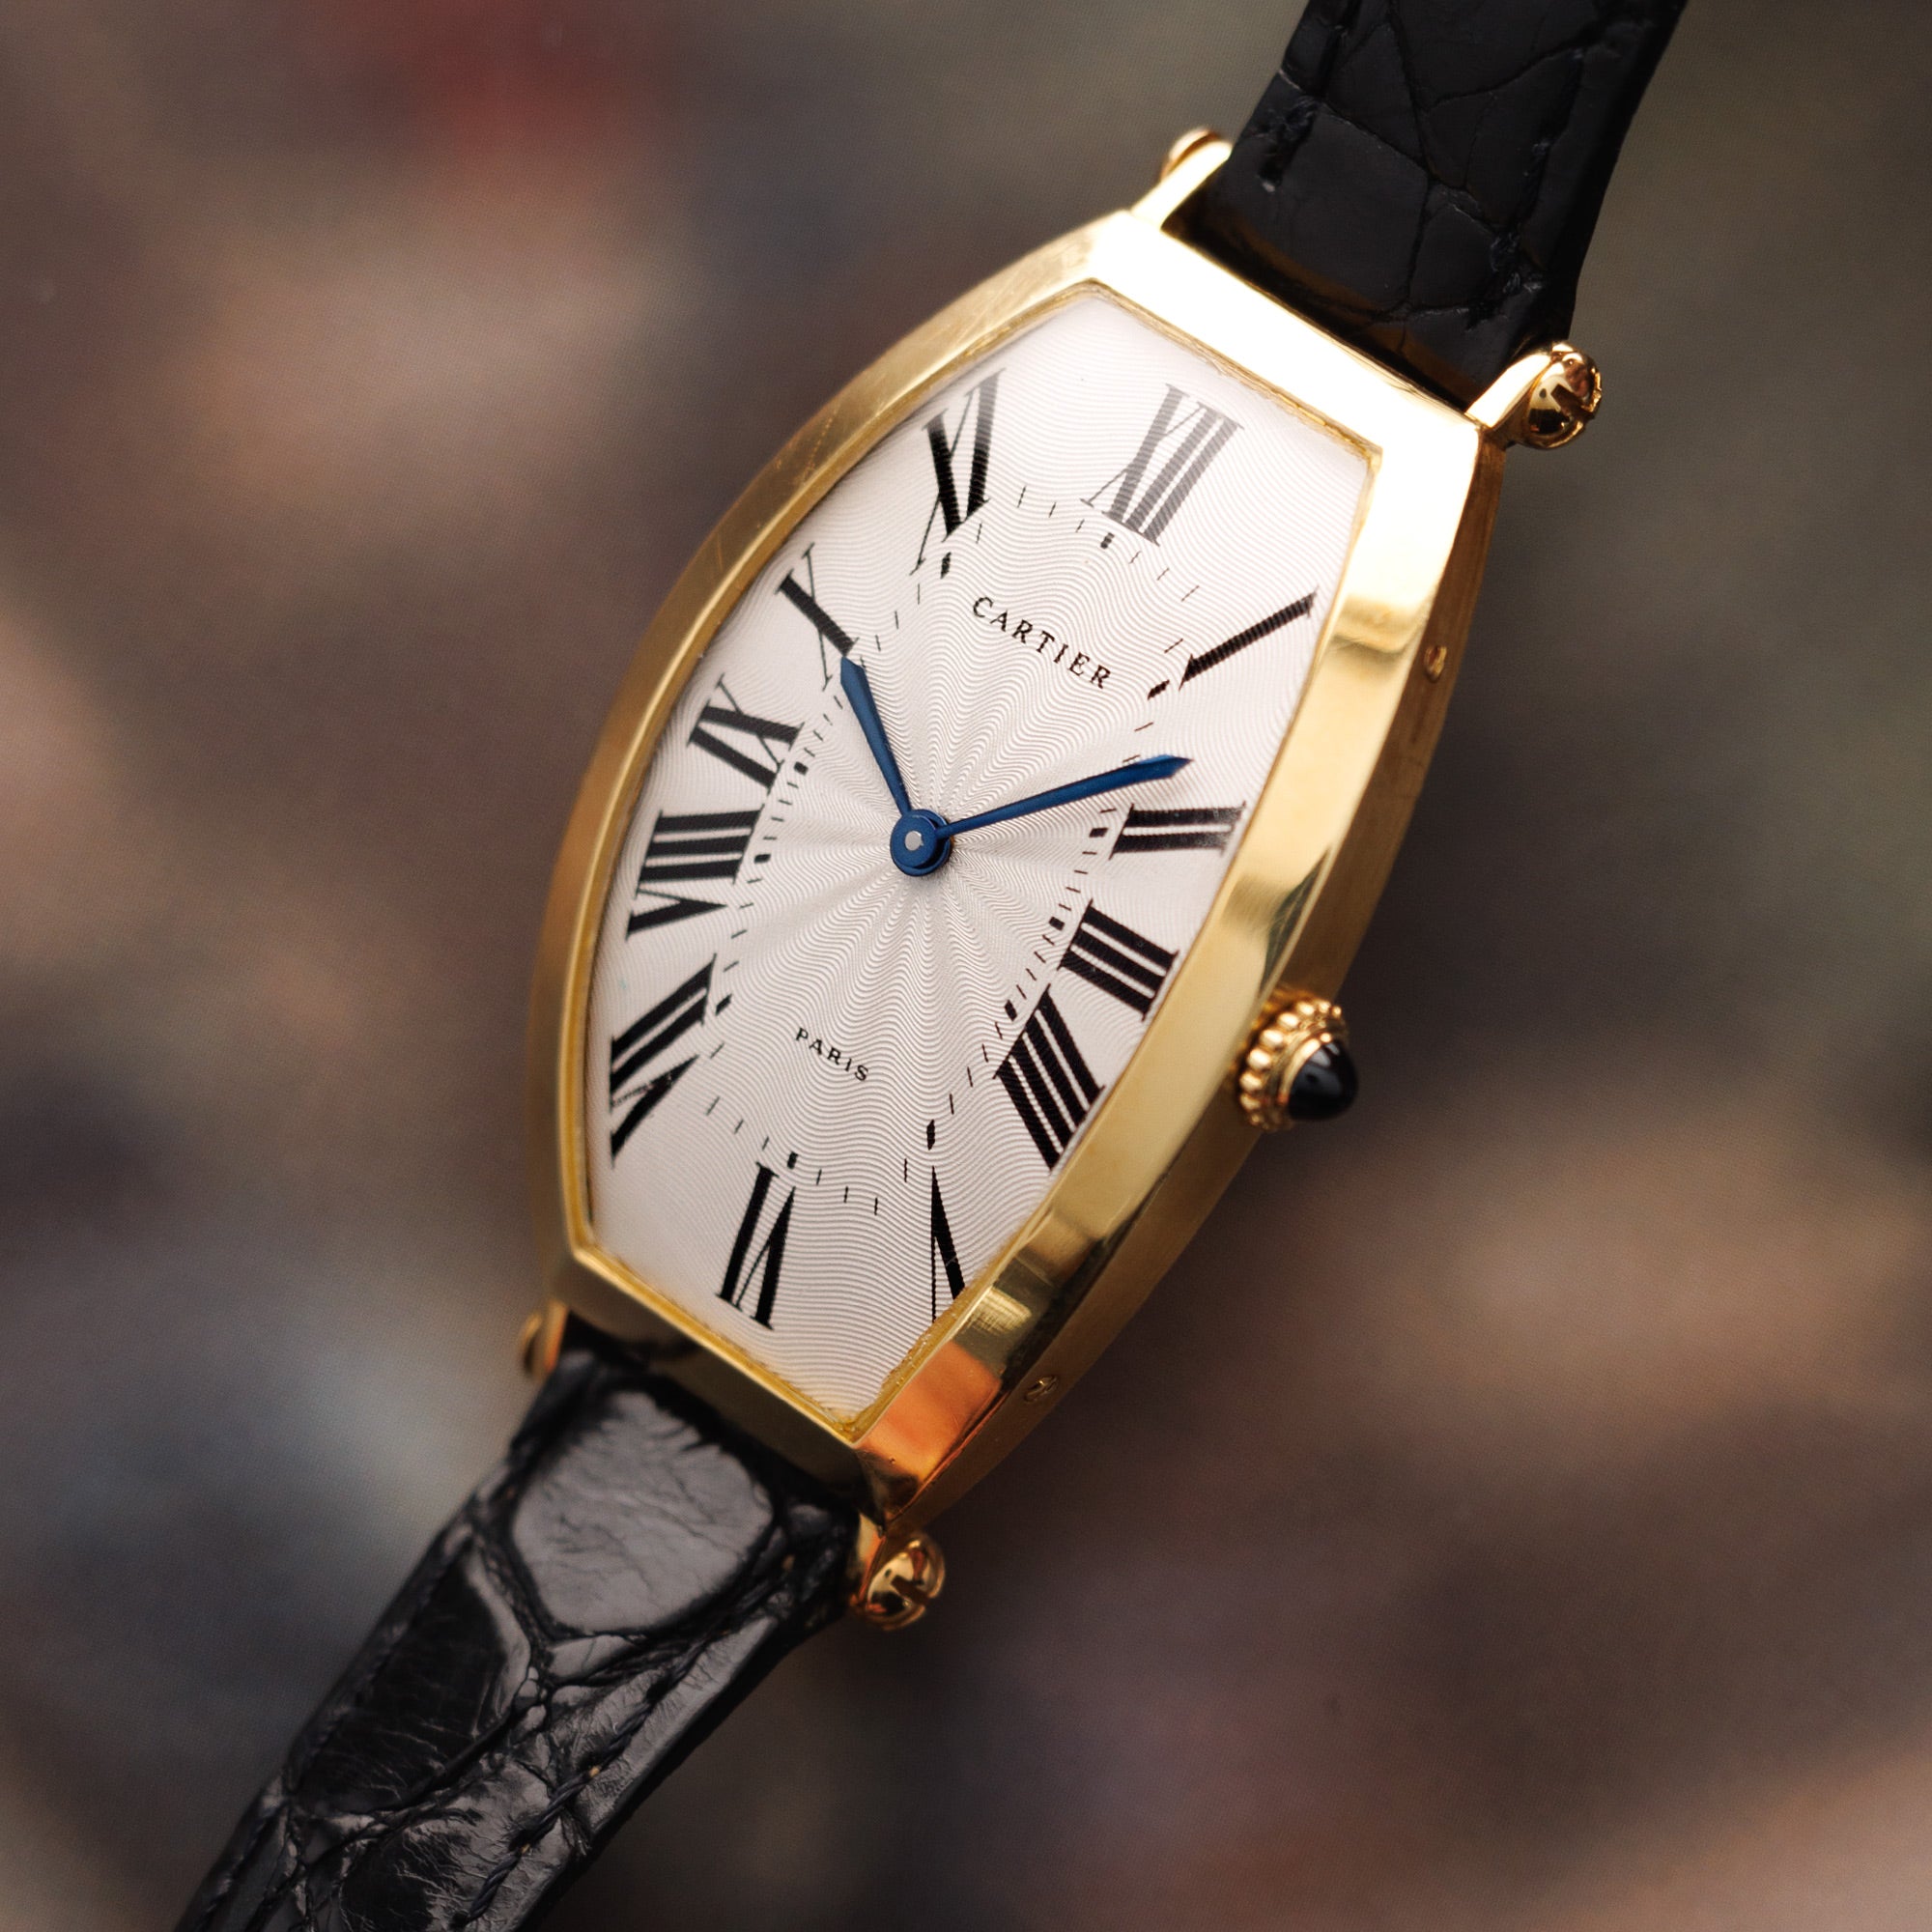 Cartier - Cartier Yellow Gold Tonneau Watch - The Keystone Watches